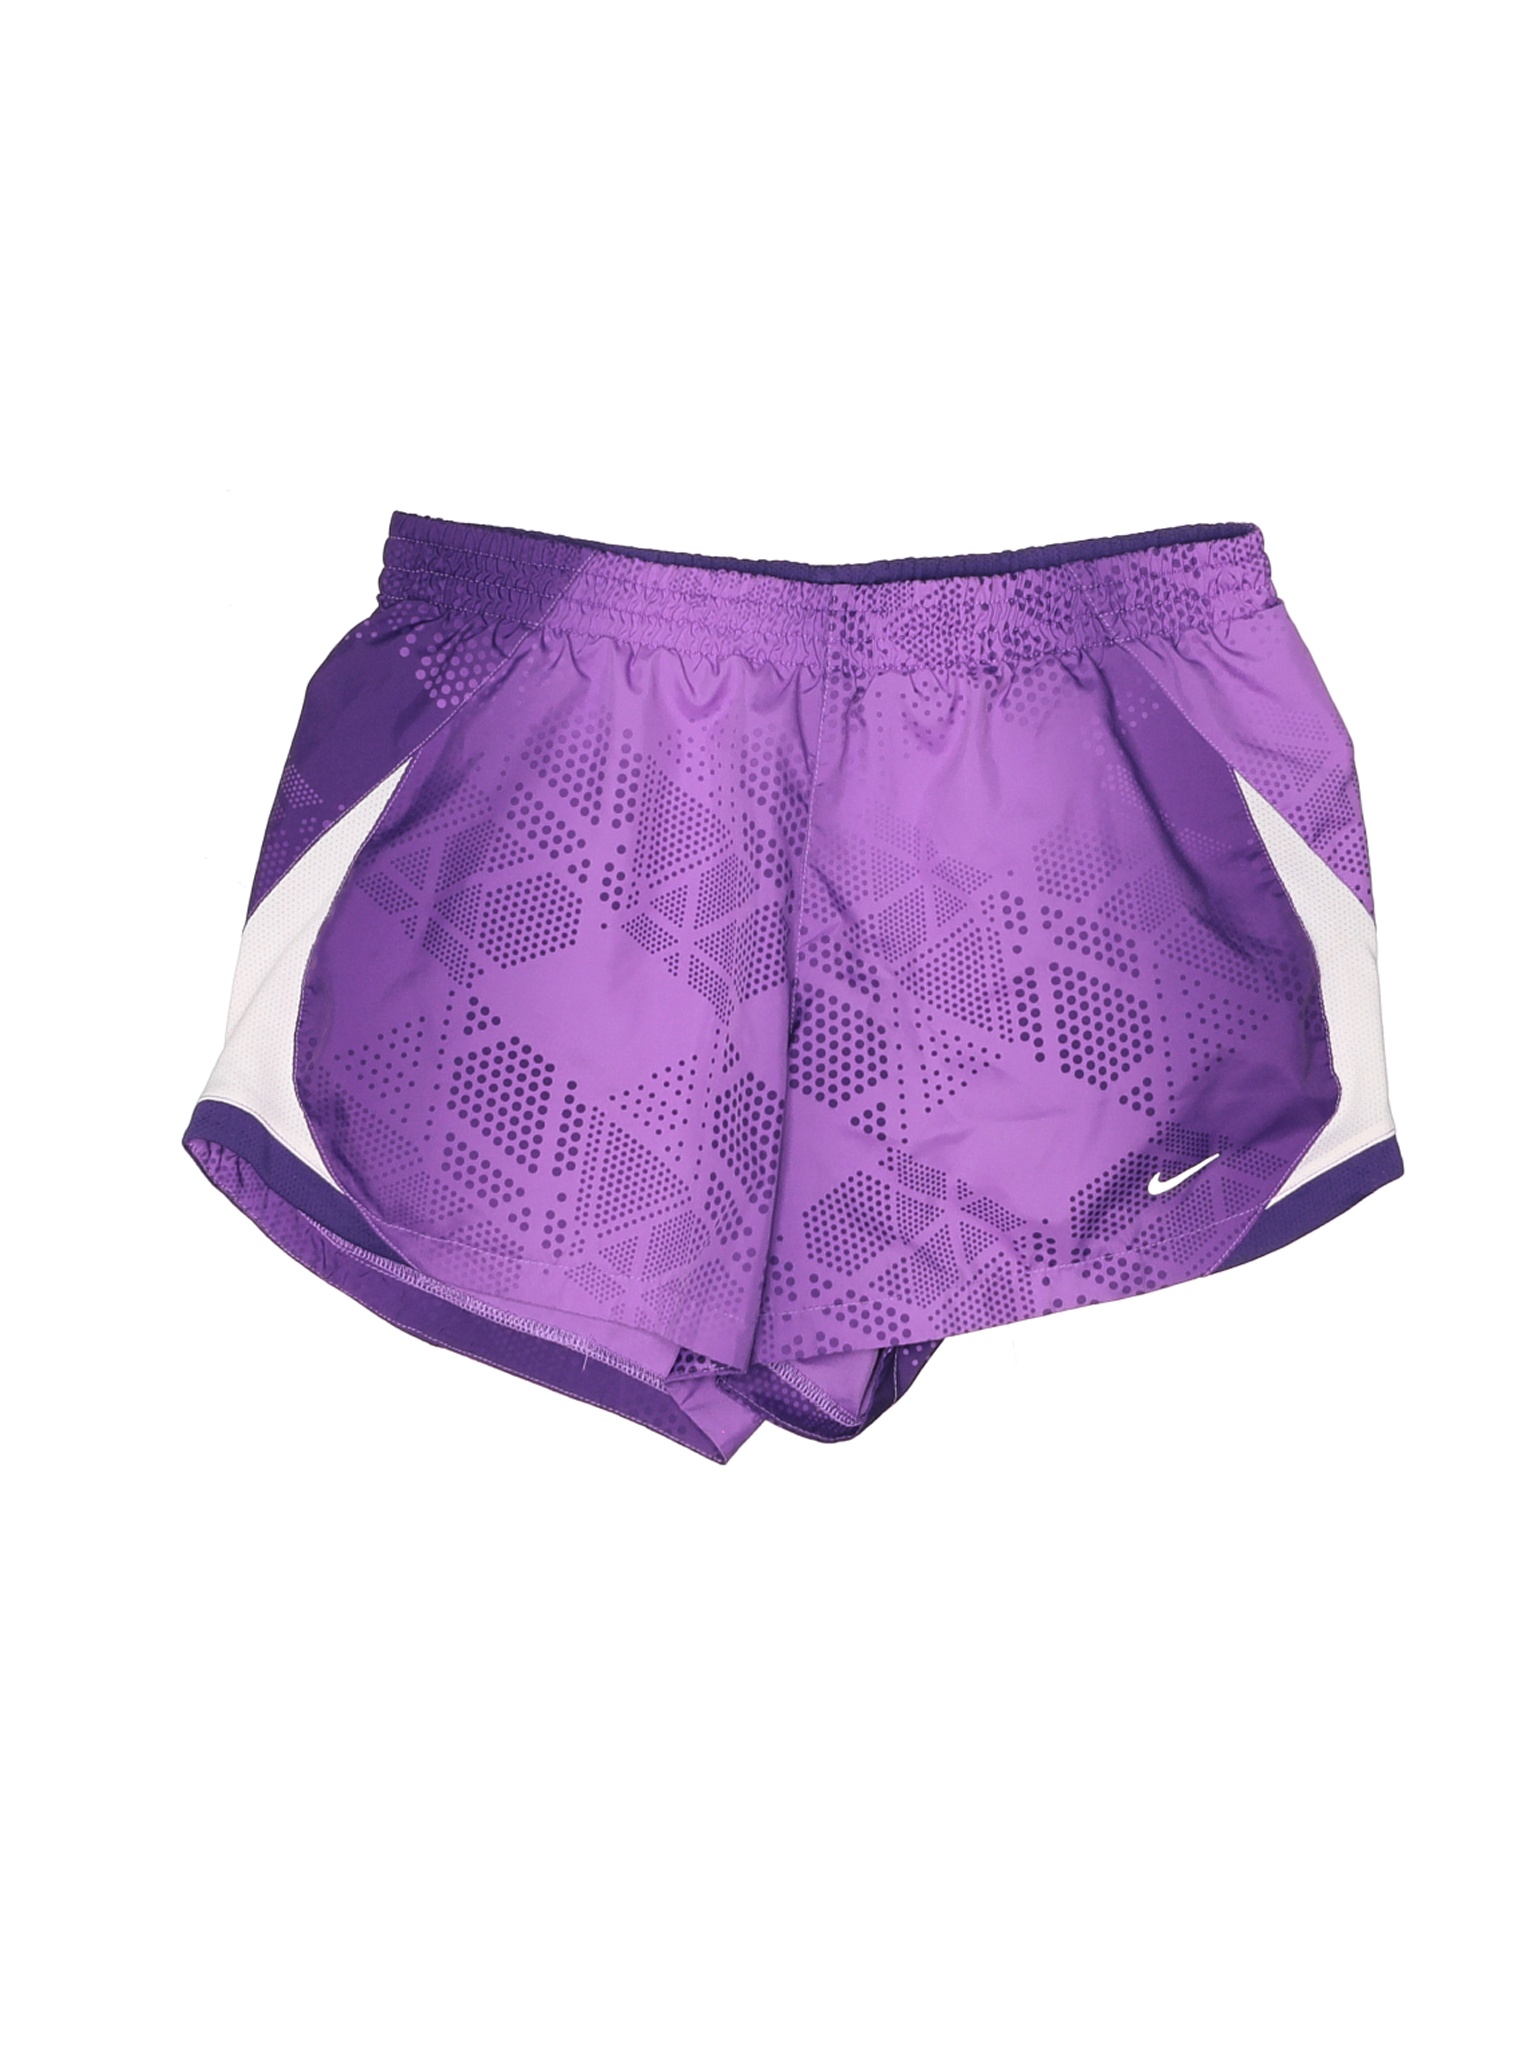 Nike Women Purple Athletic Shorts M | eBay